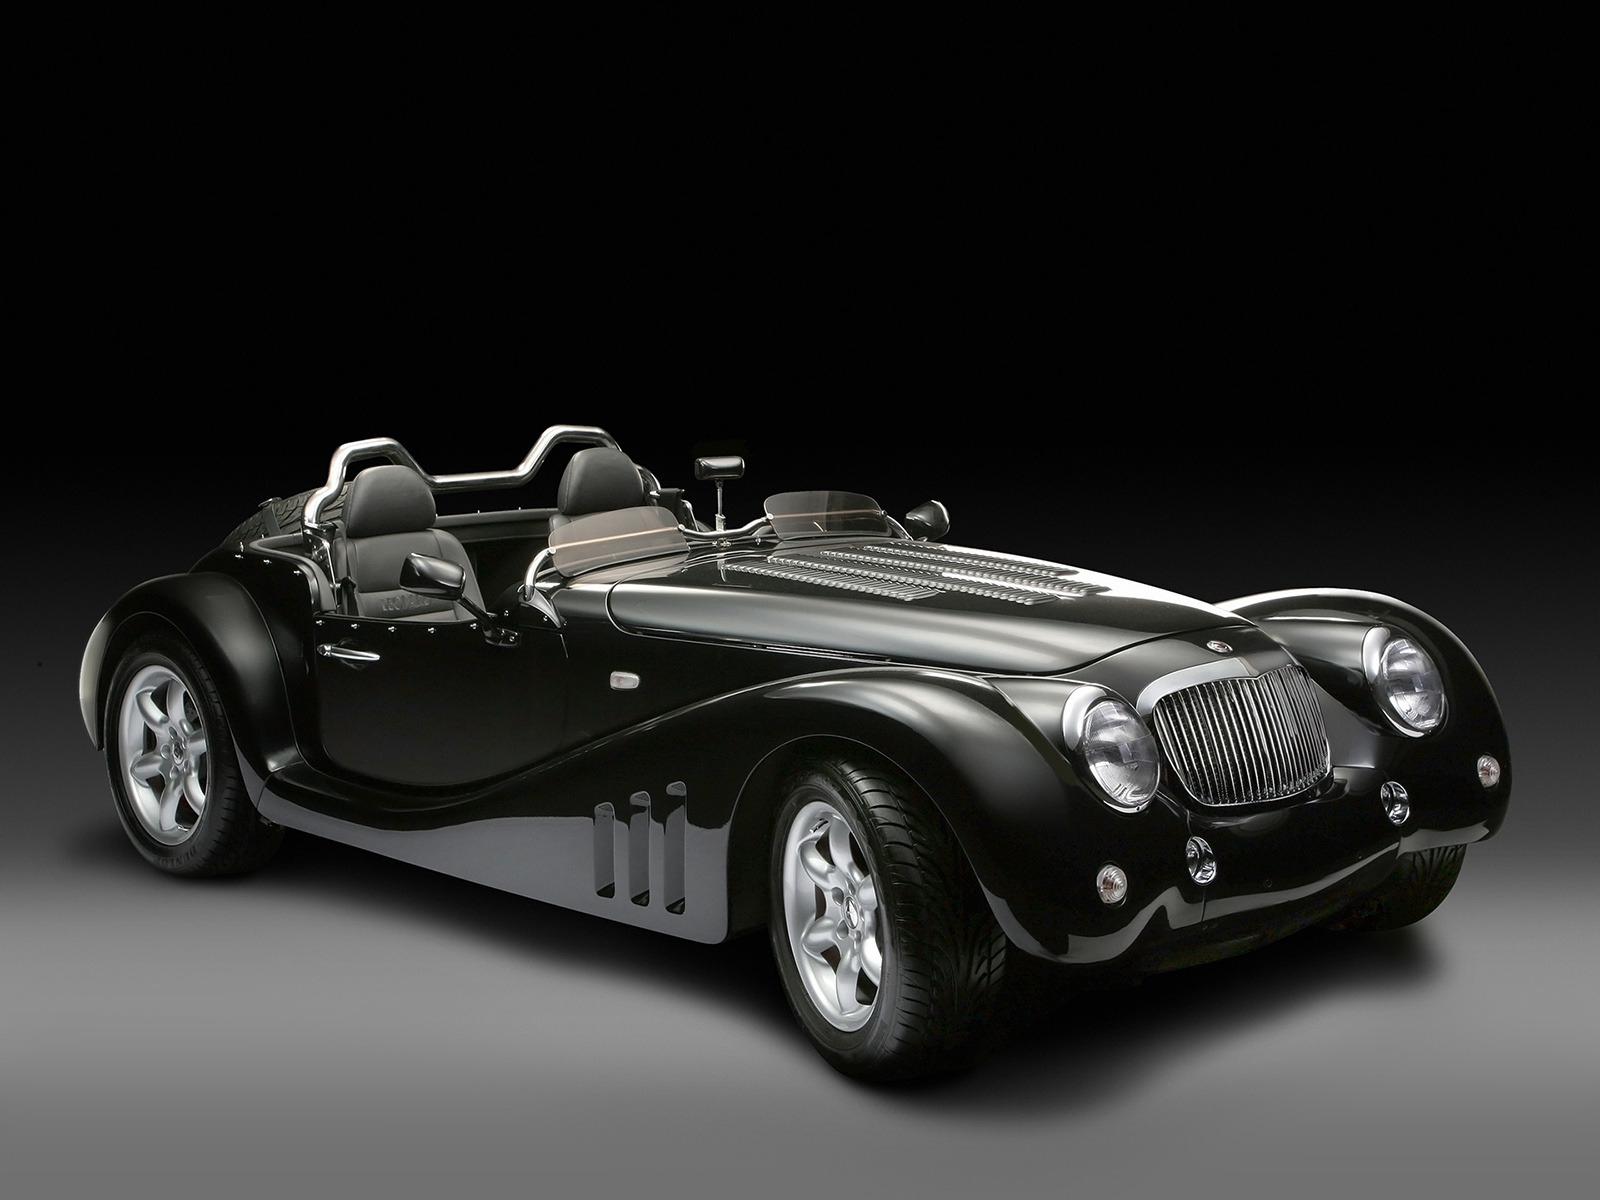 2013 Leopard Roadster Studio for 1600 x 1200 resolution